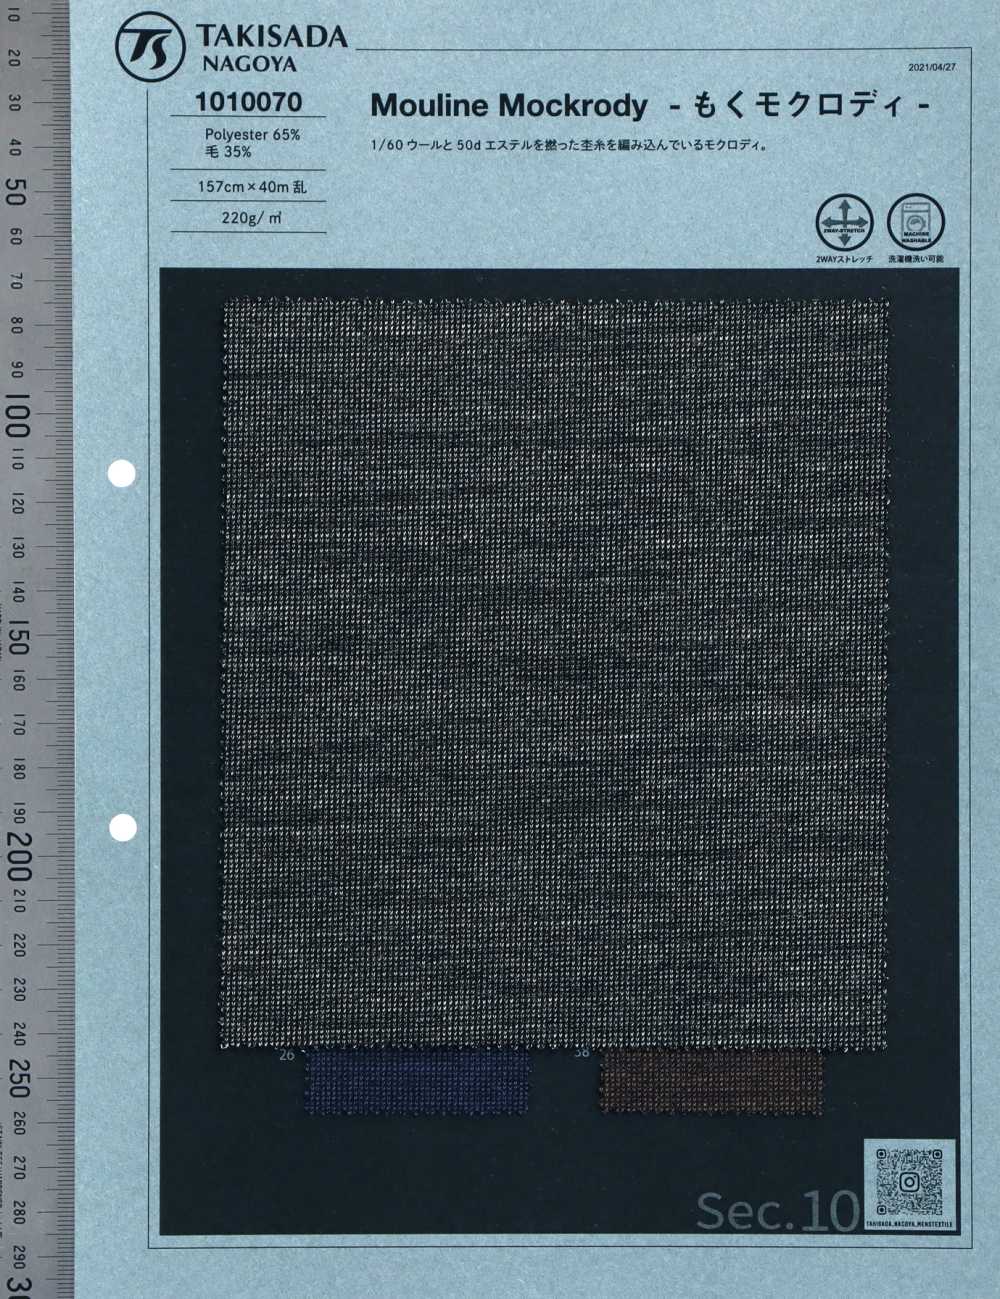 1010070 Wolle/Polyester Murinemocrodi[Textilgewebe] Takisada Nagoya